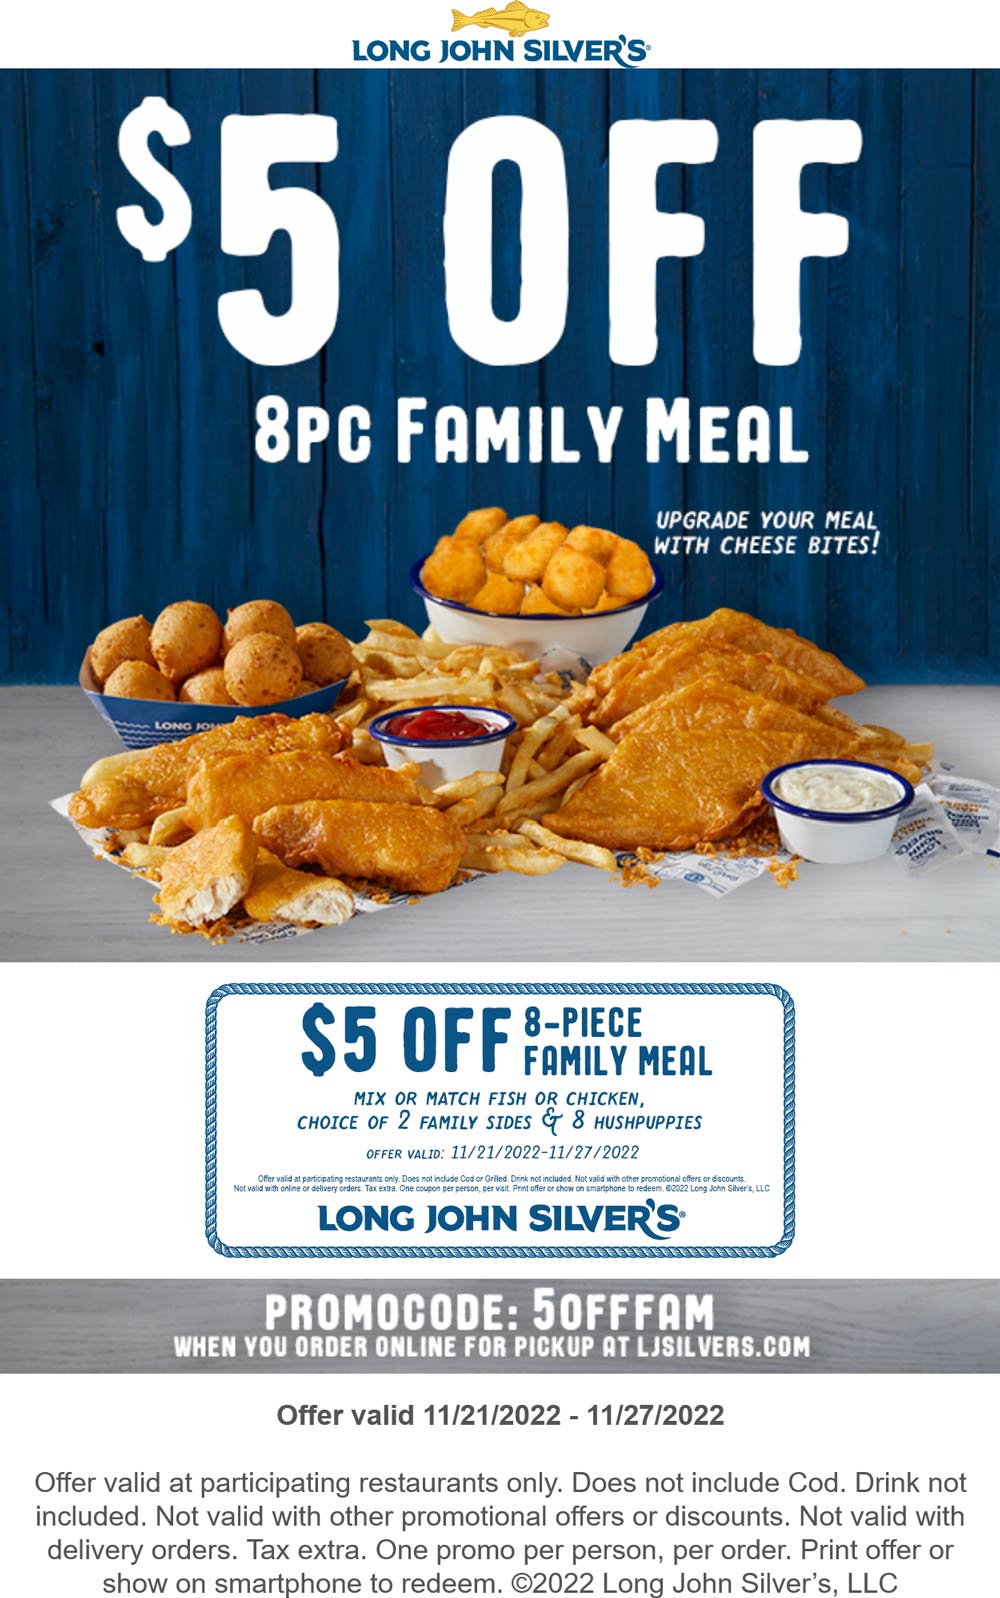 Long John Silvers coupons & promo code for [November 2022]